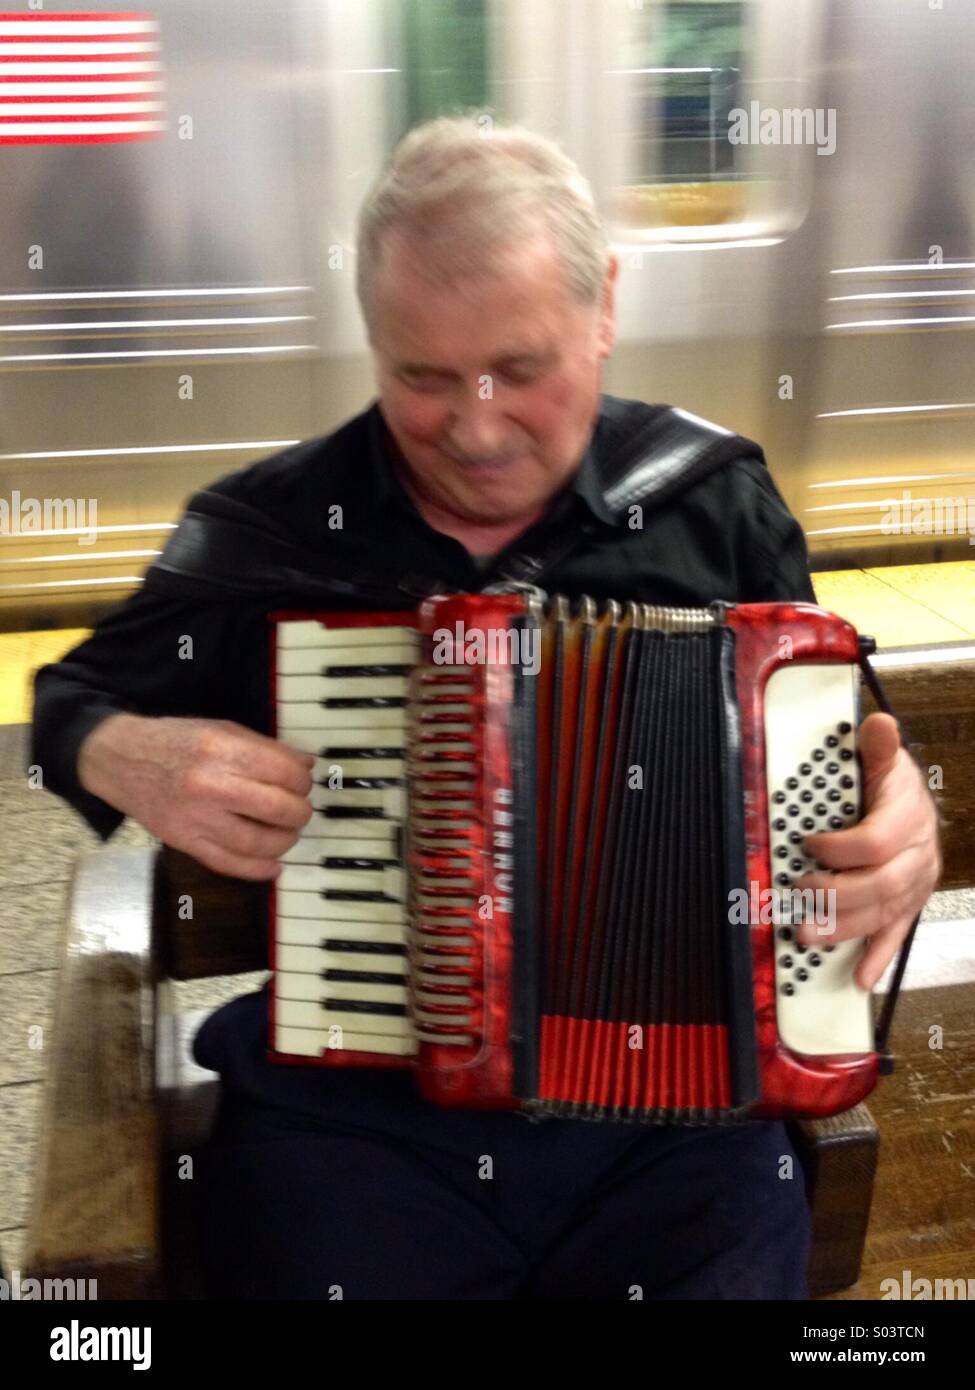 Accordionist in the New York subway. Stock Photo